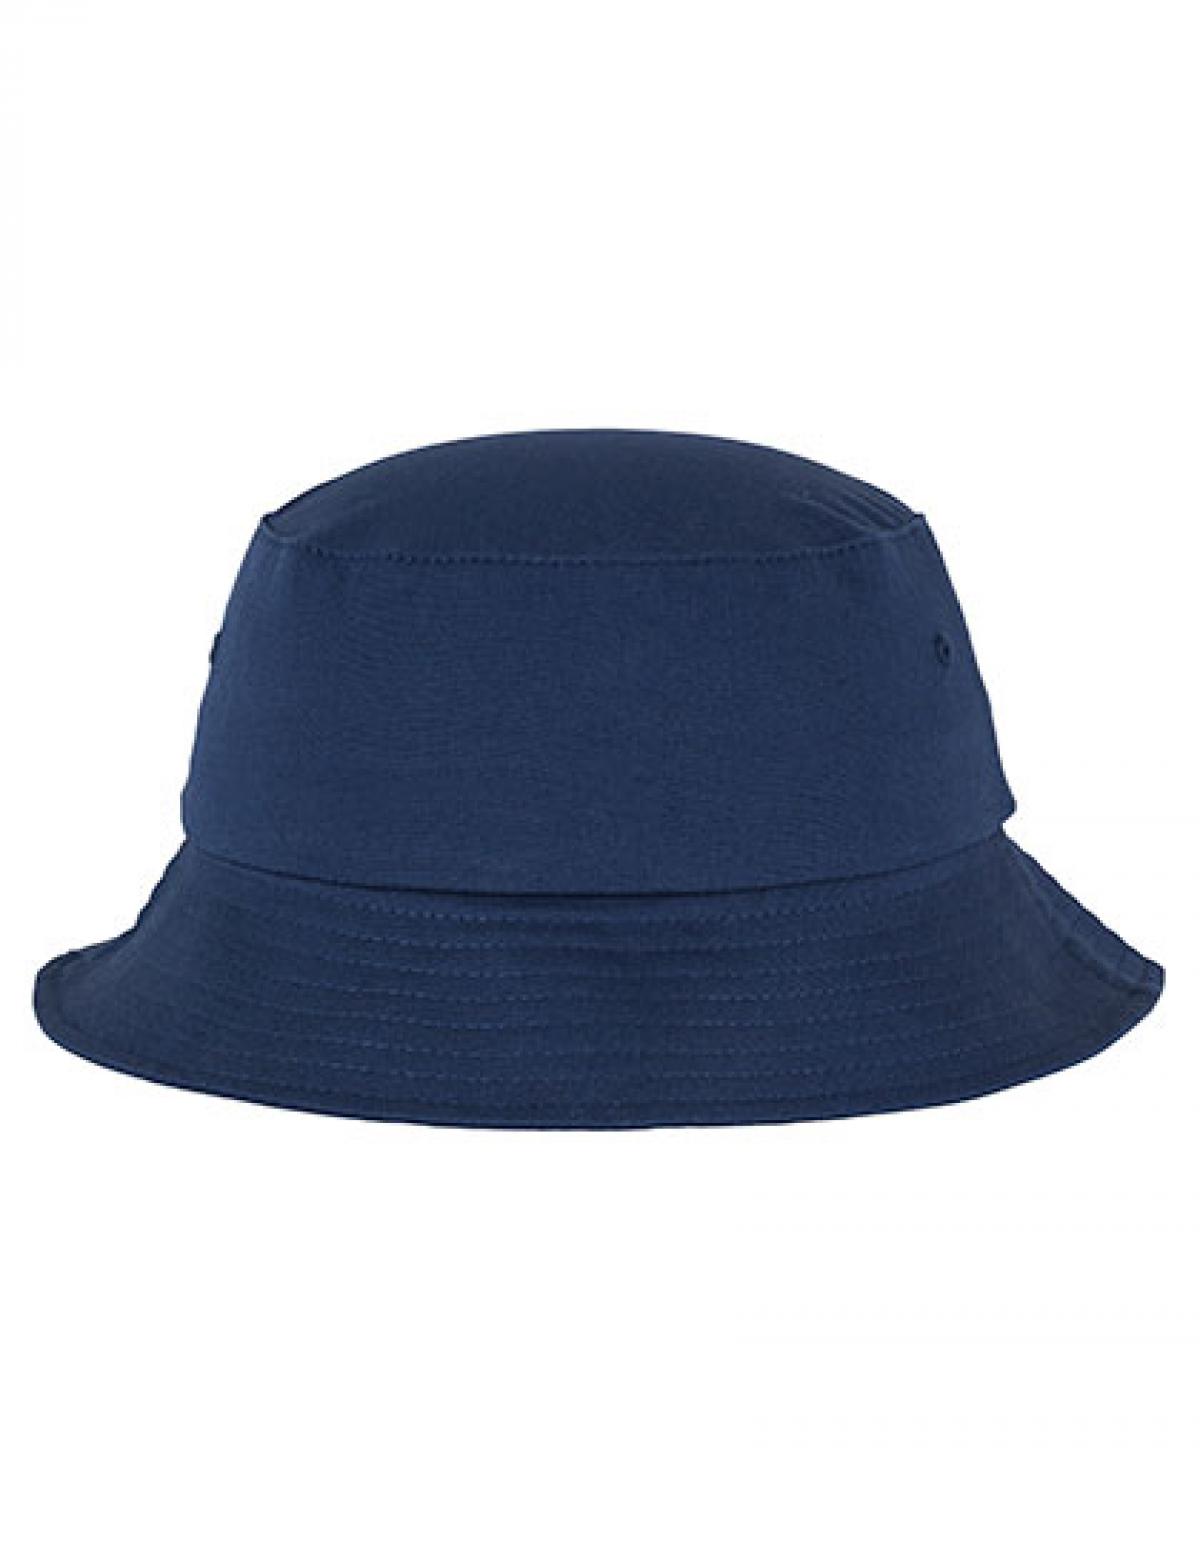 | / / FLEXFIT / Bucket Hat Twill Hut eBay Mütze Cotton Kappe |